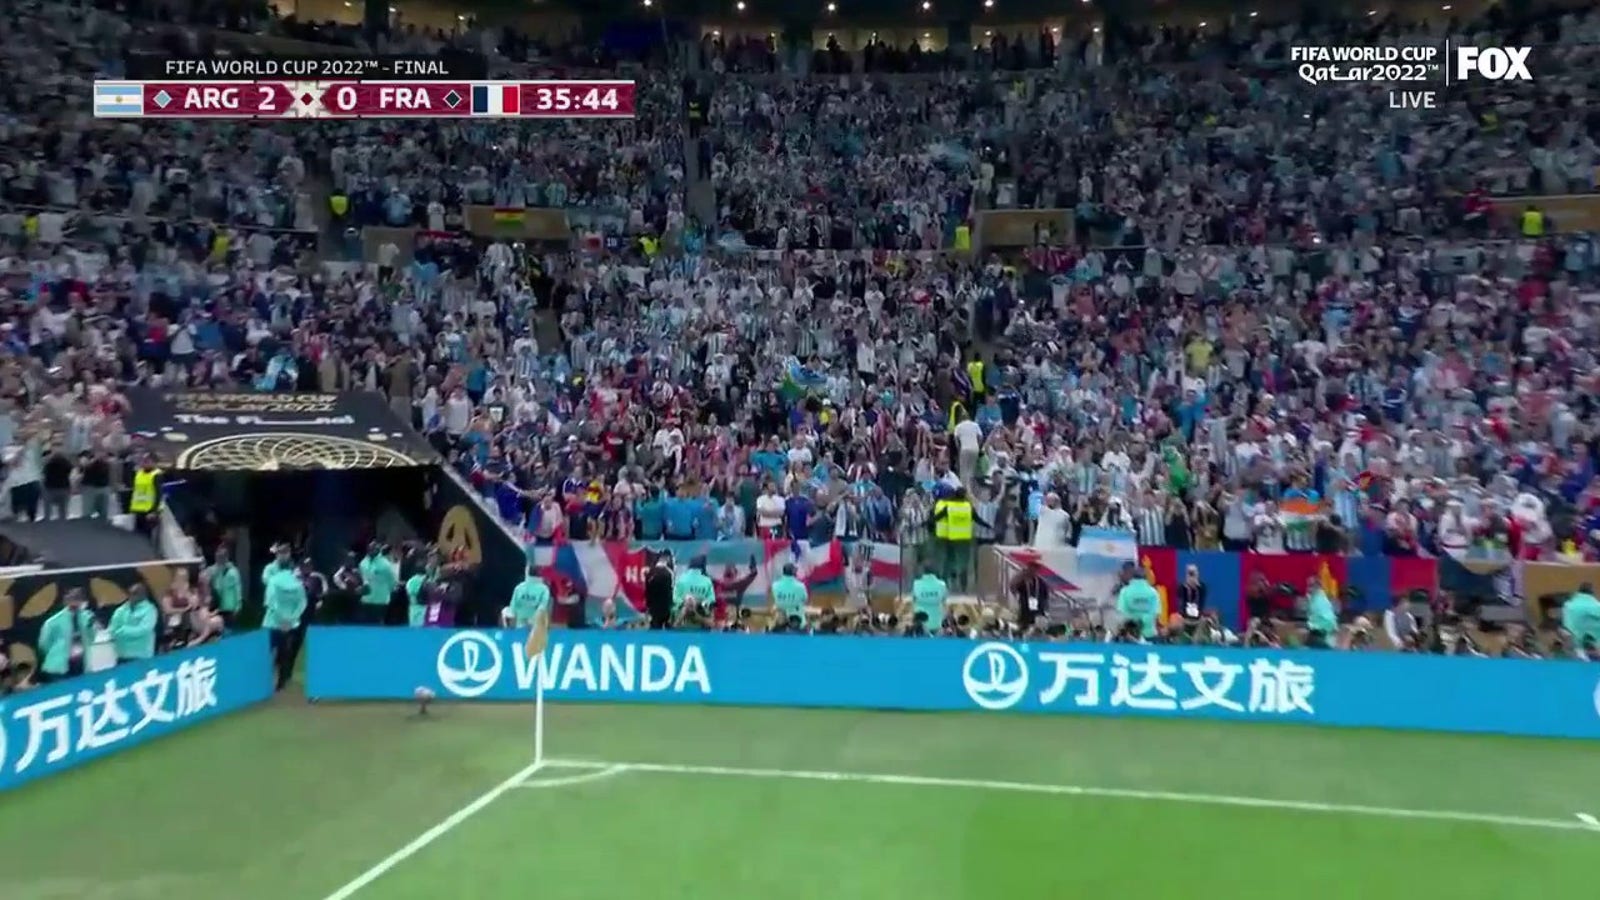 Argentina's Angel Di Maria scores goal vs. France in 36'